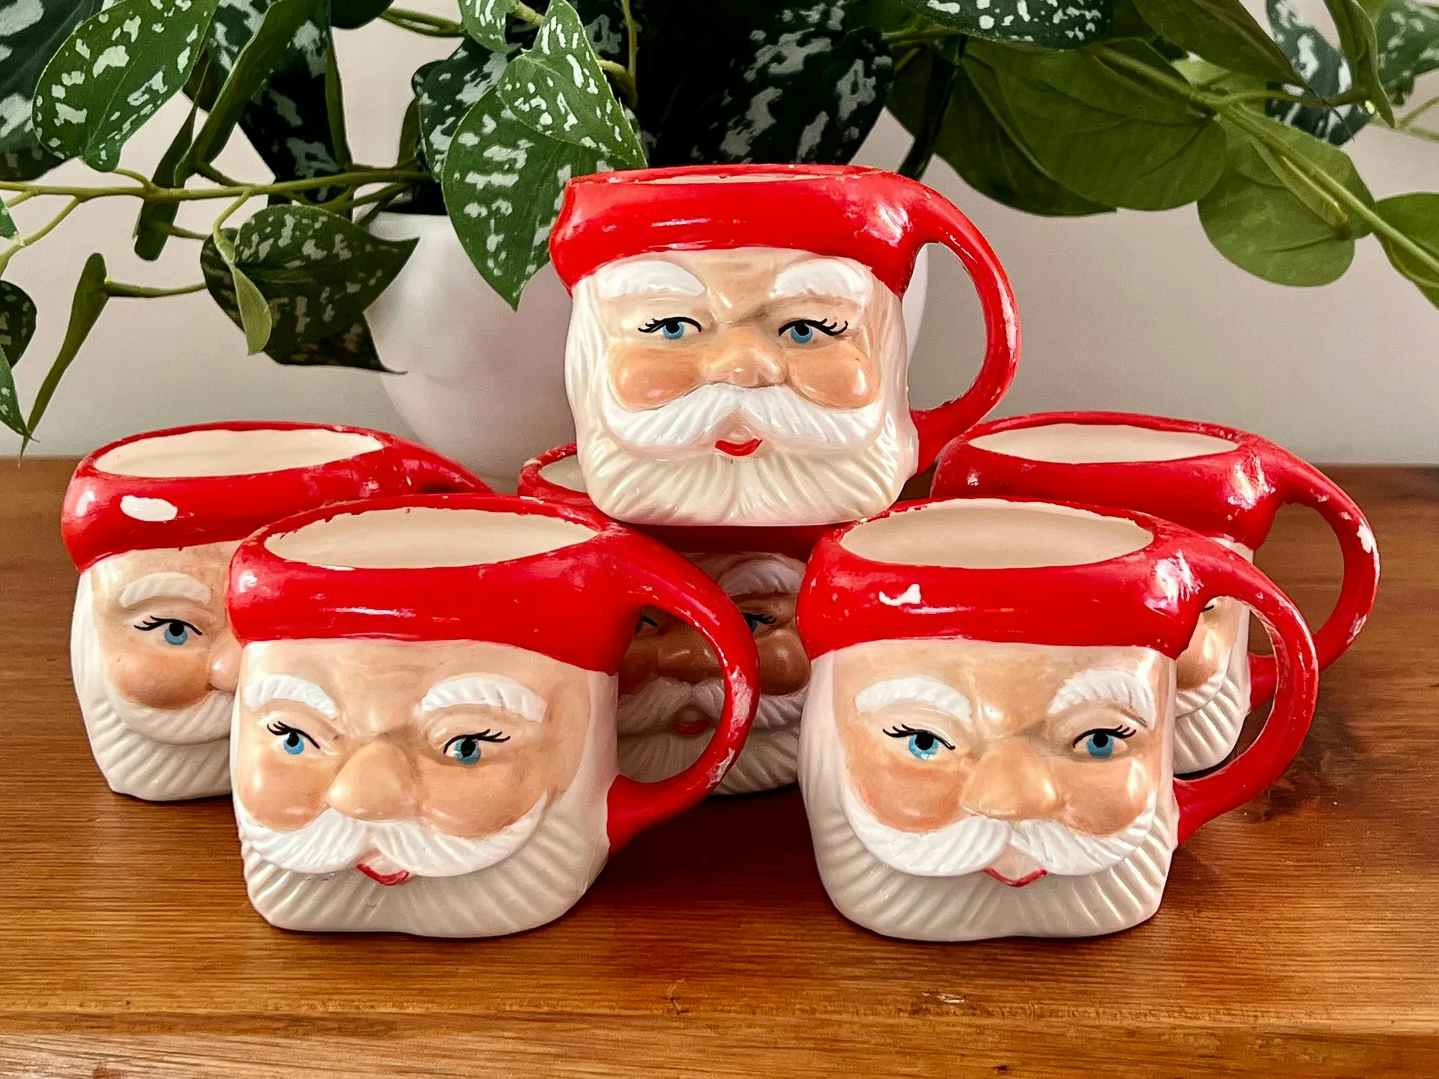 vintage santa mugs - A collection of Vintage Hand-Painted Santa Mugs on a table